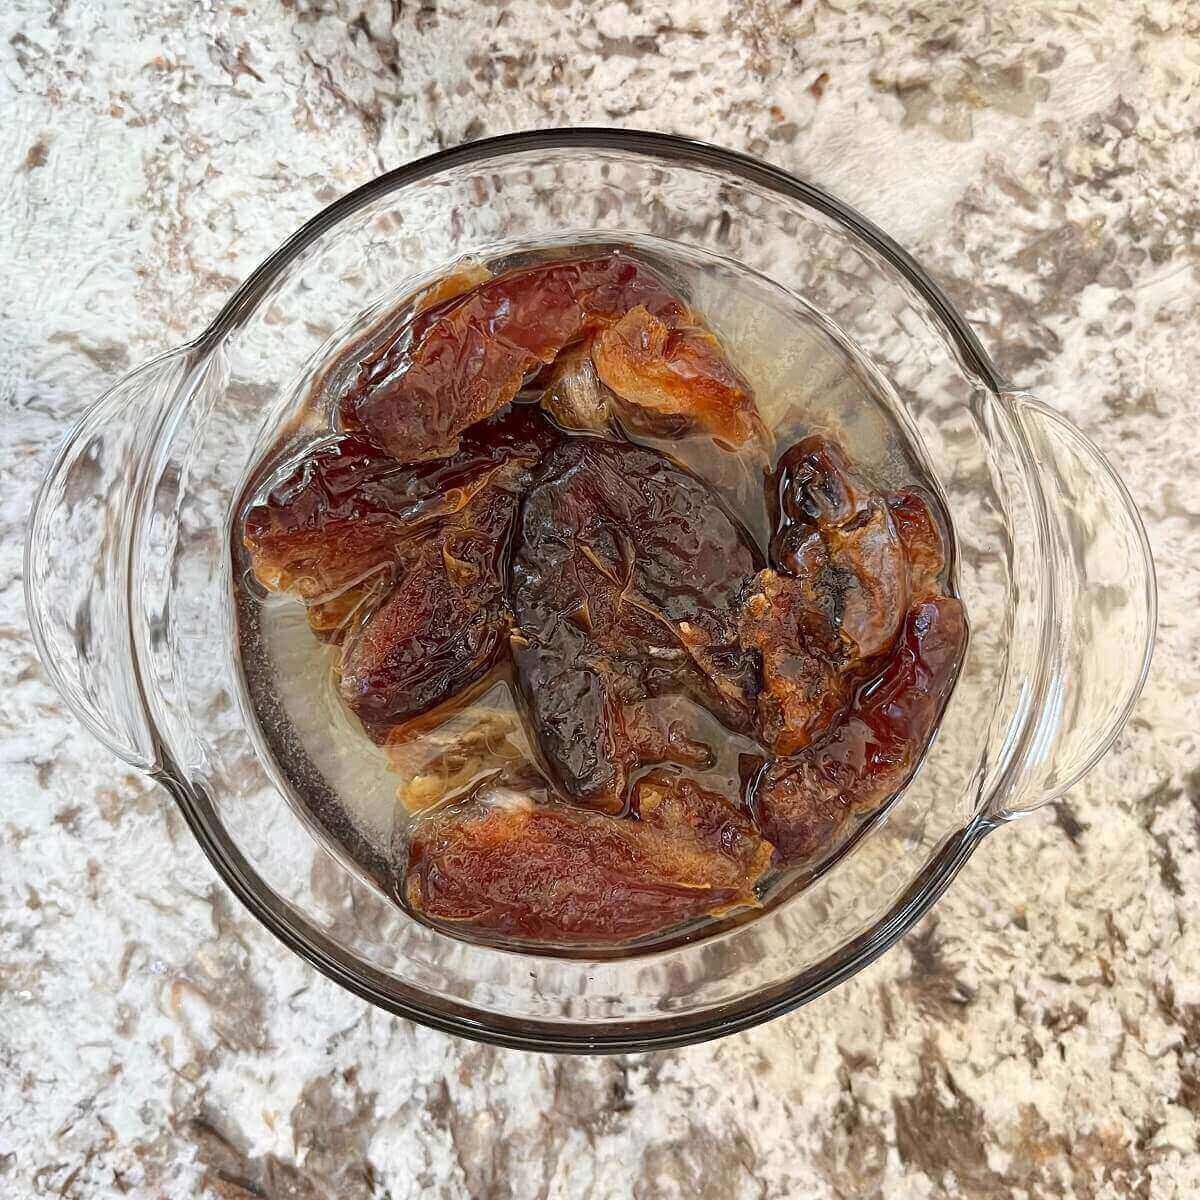 Medjool dates soaking in water in a glass bowl.